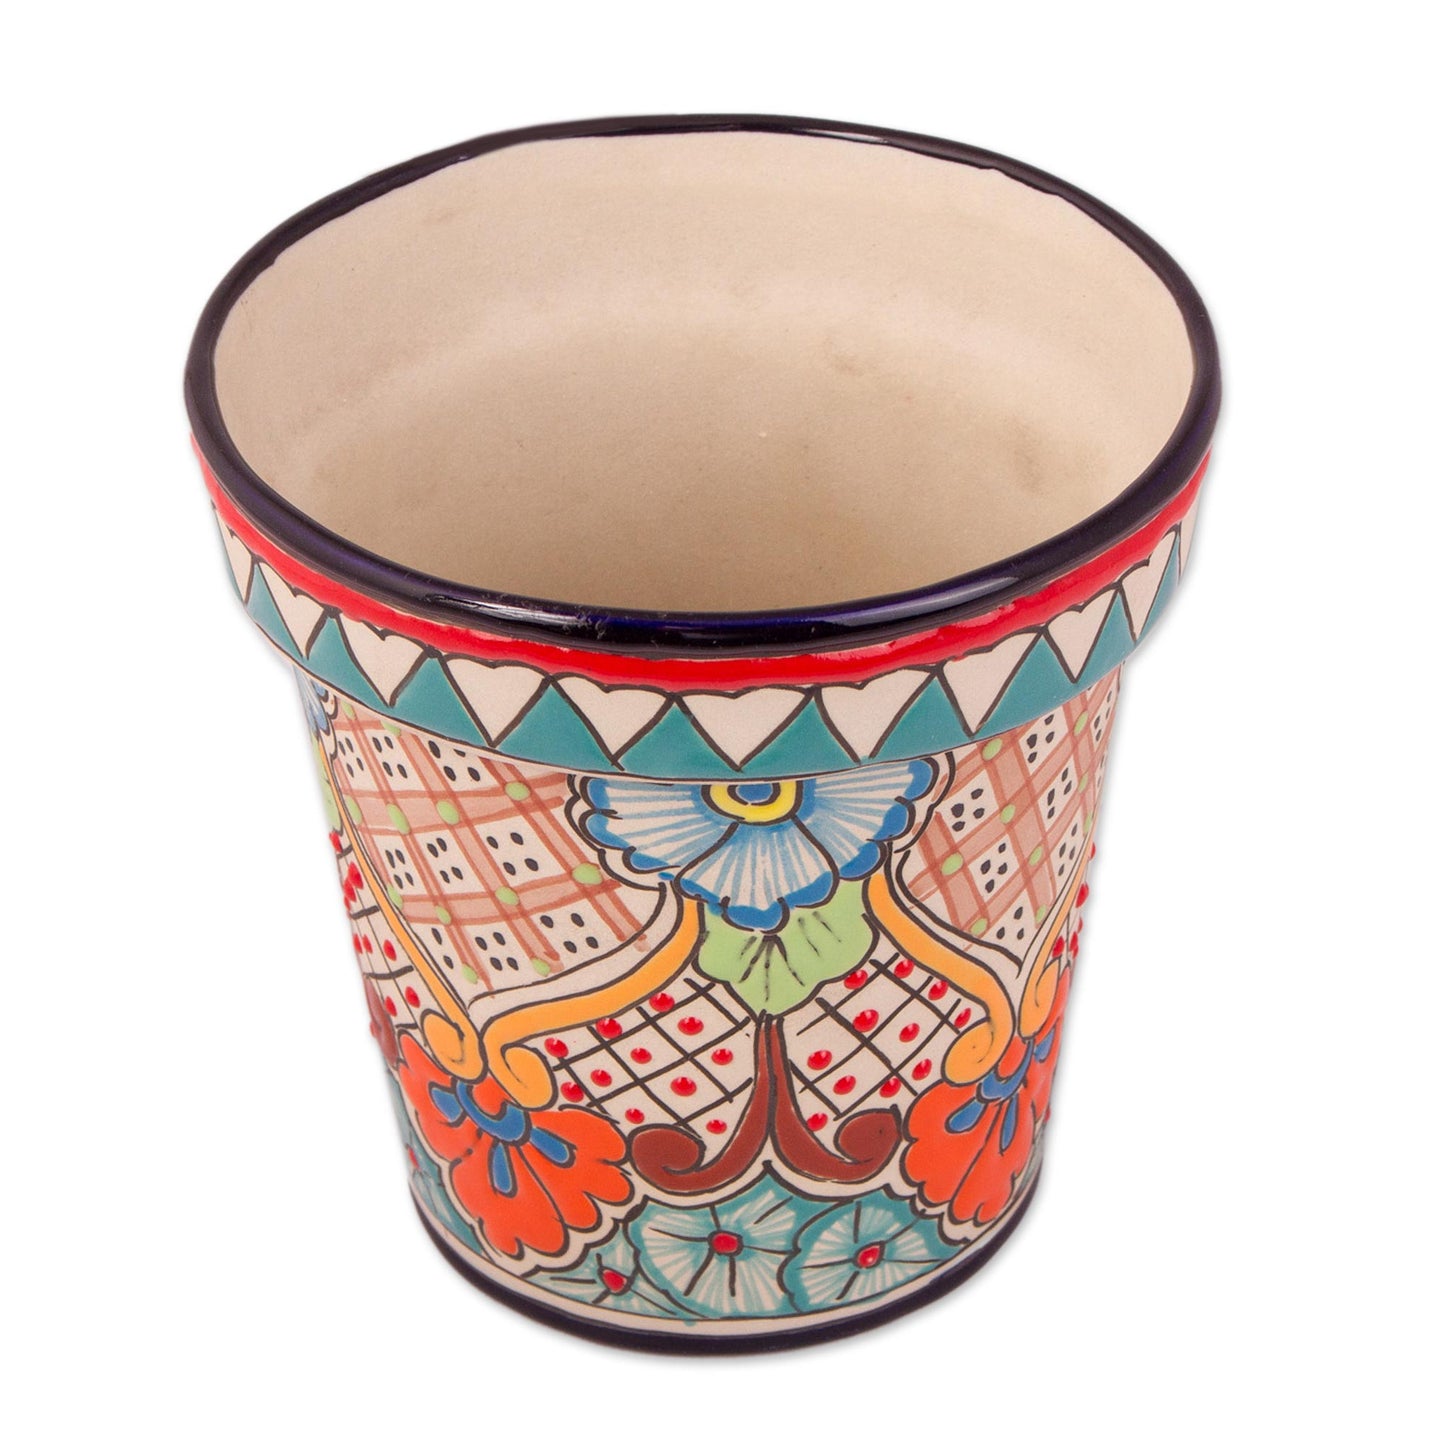 Sunlit Garden Talavera Style Colorful Floral Ceramic Flower Pot (6.5 inch)